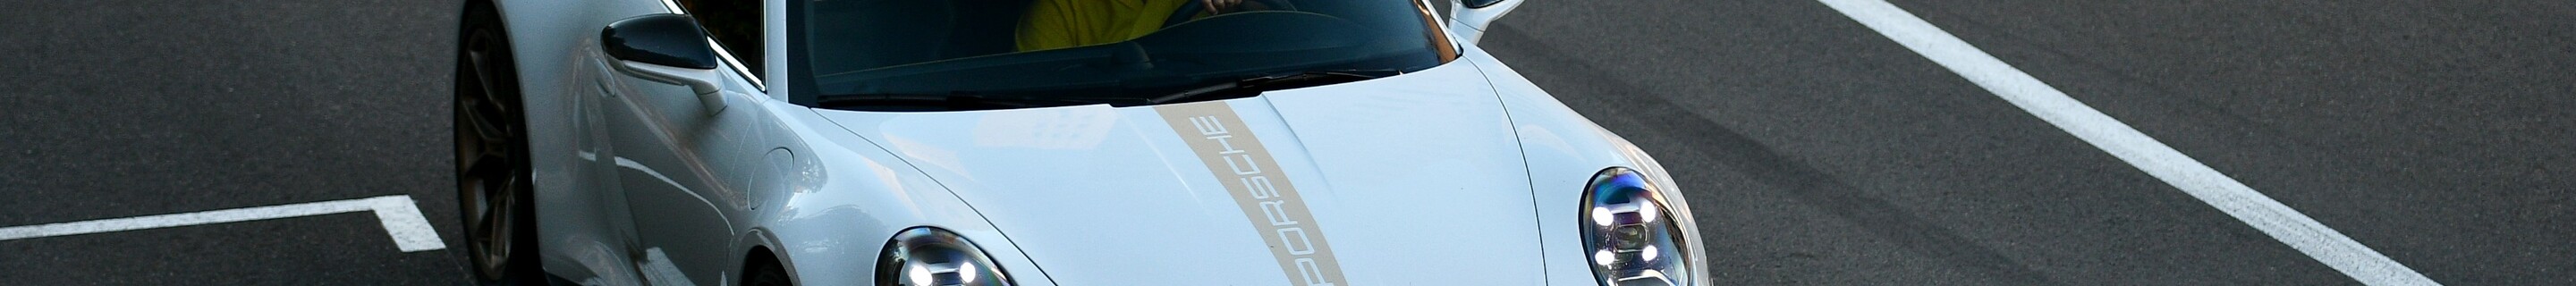 Porsche 992 GT3 Touring